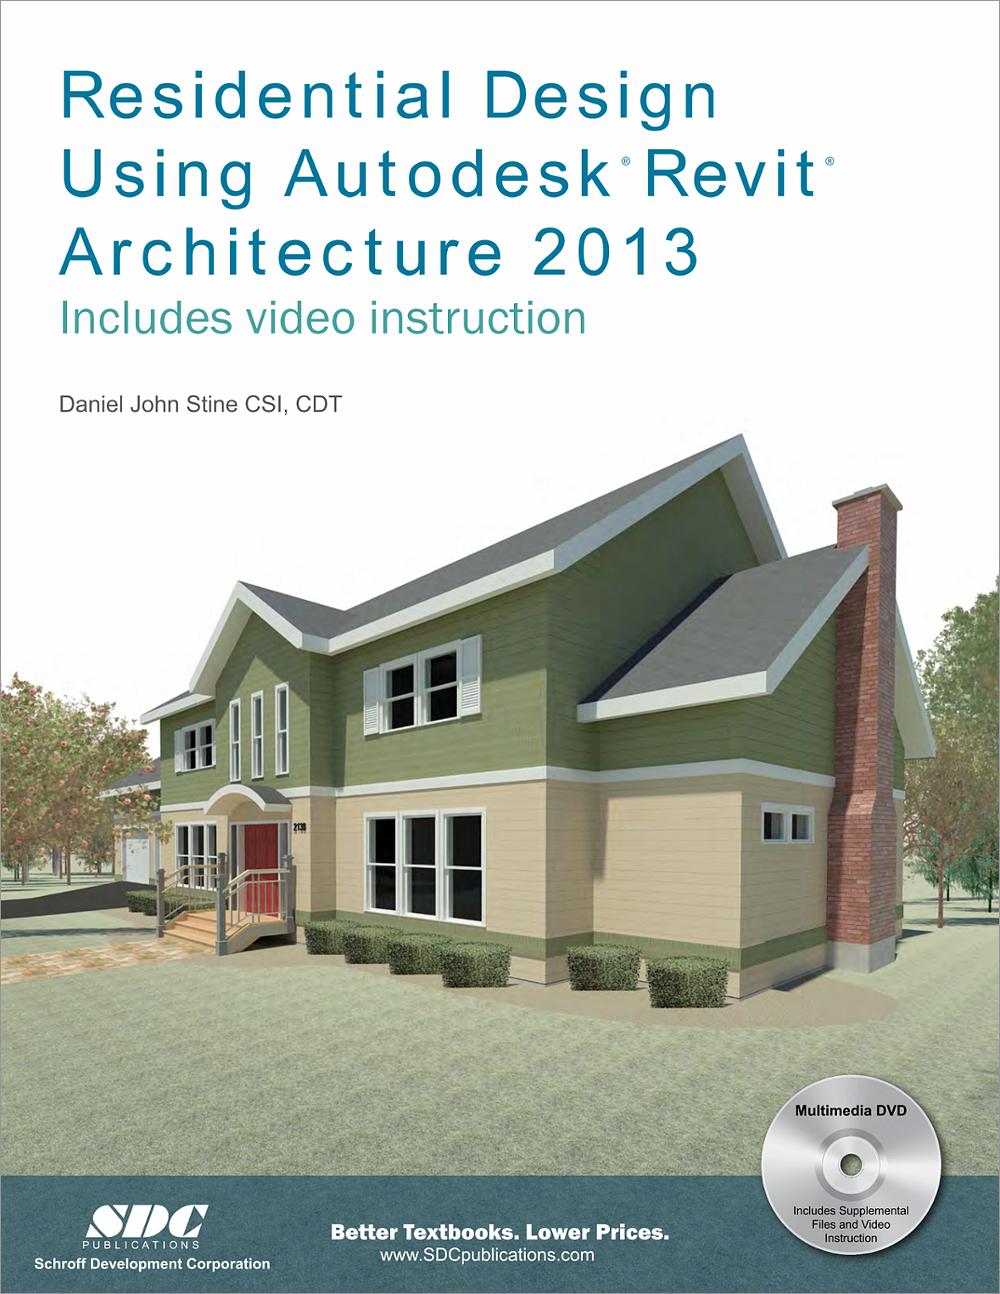 autodesk revit 2019 student version free download